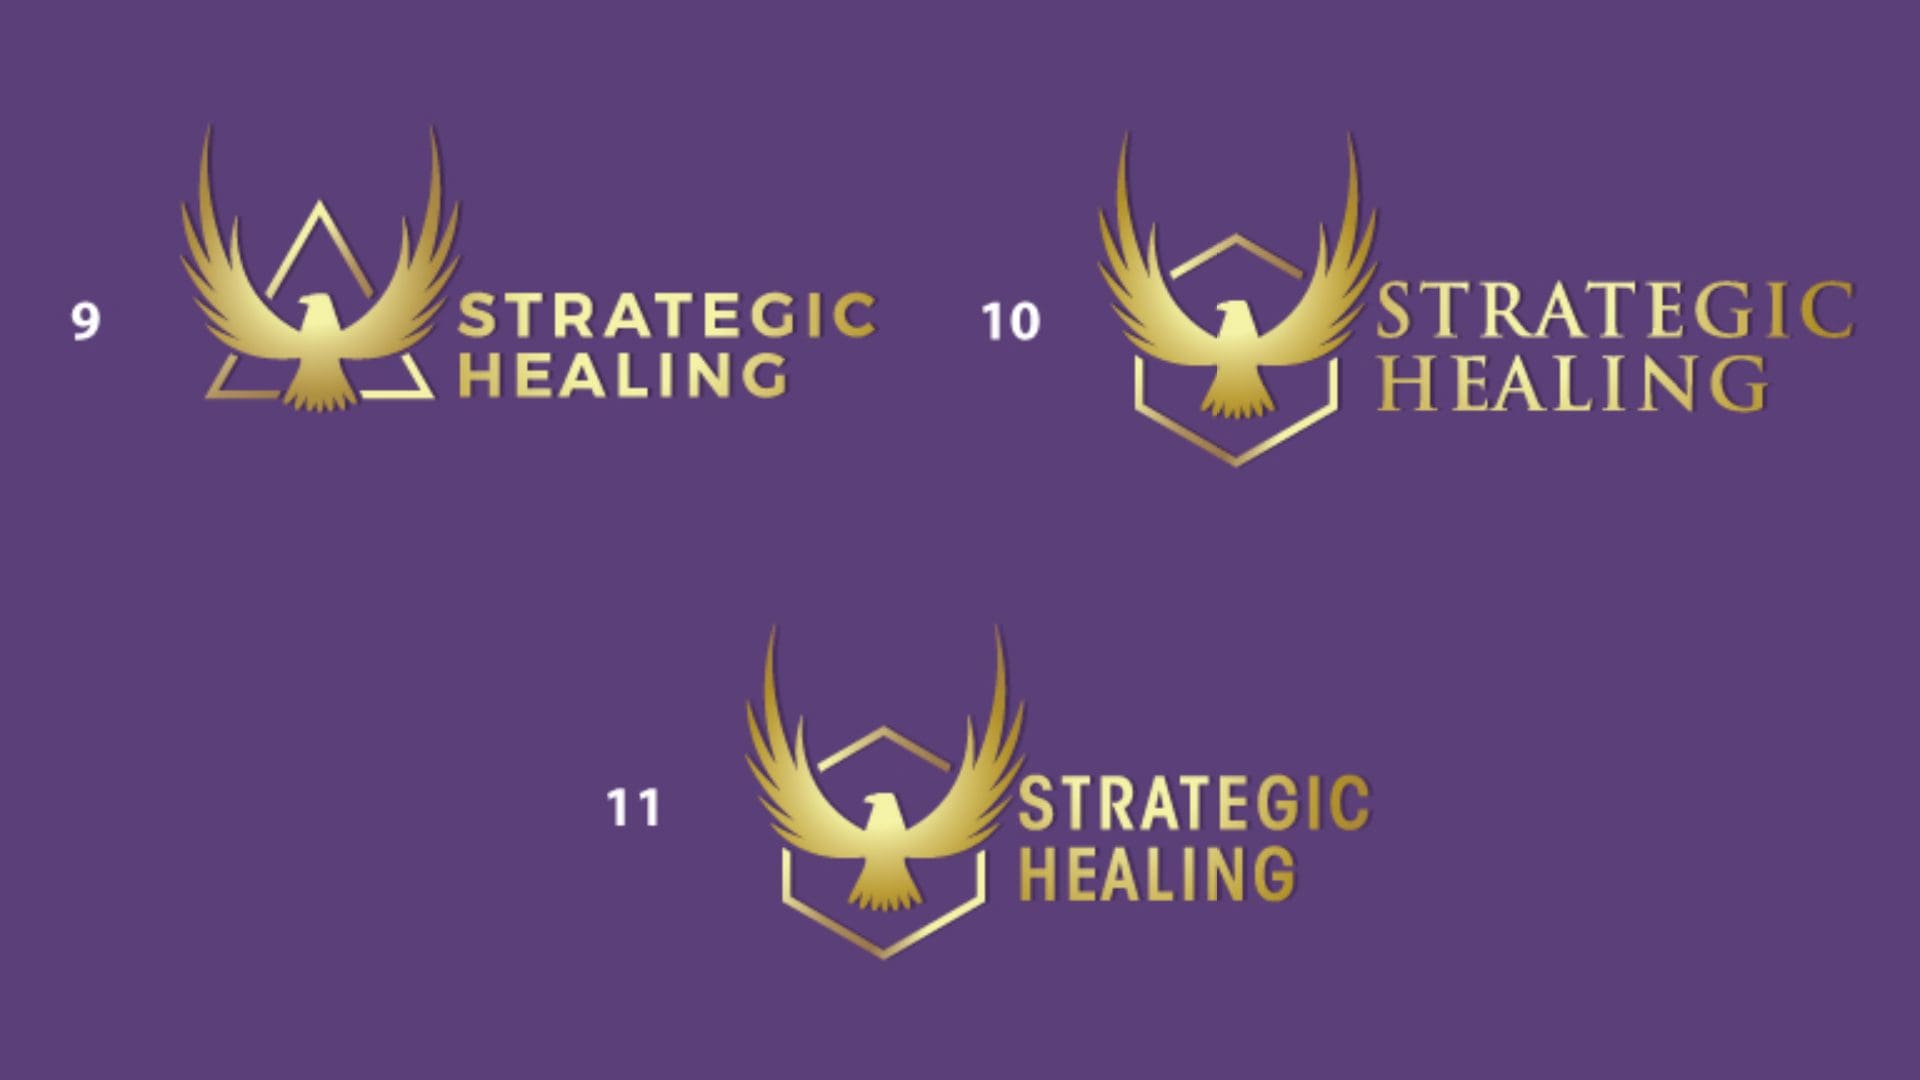 Strategic Healing - Eagle Concept 9-11